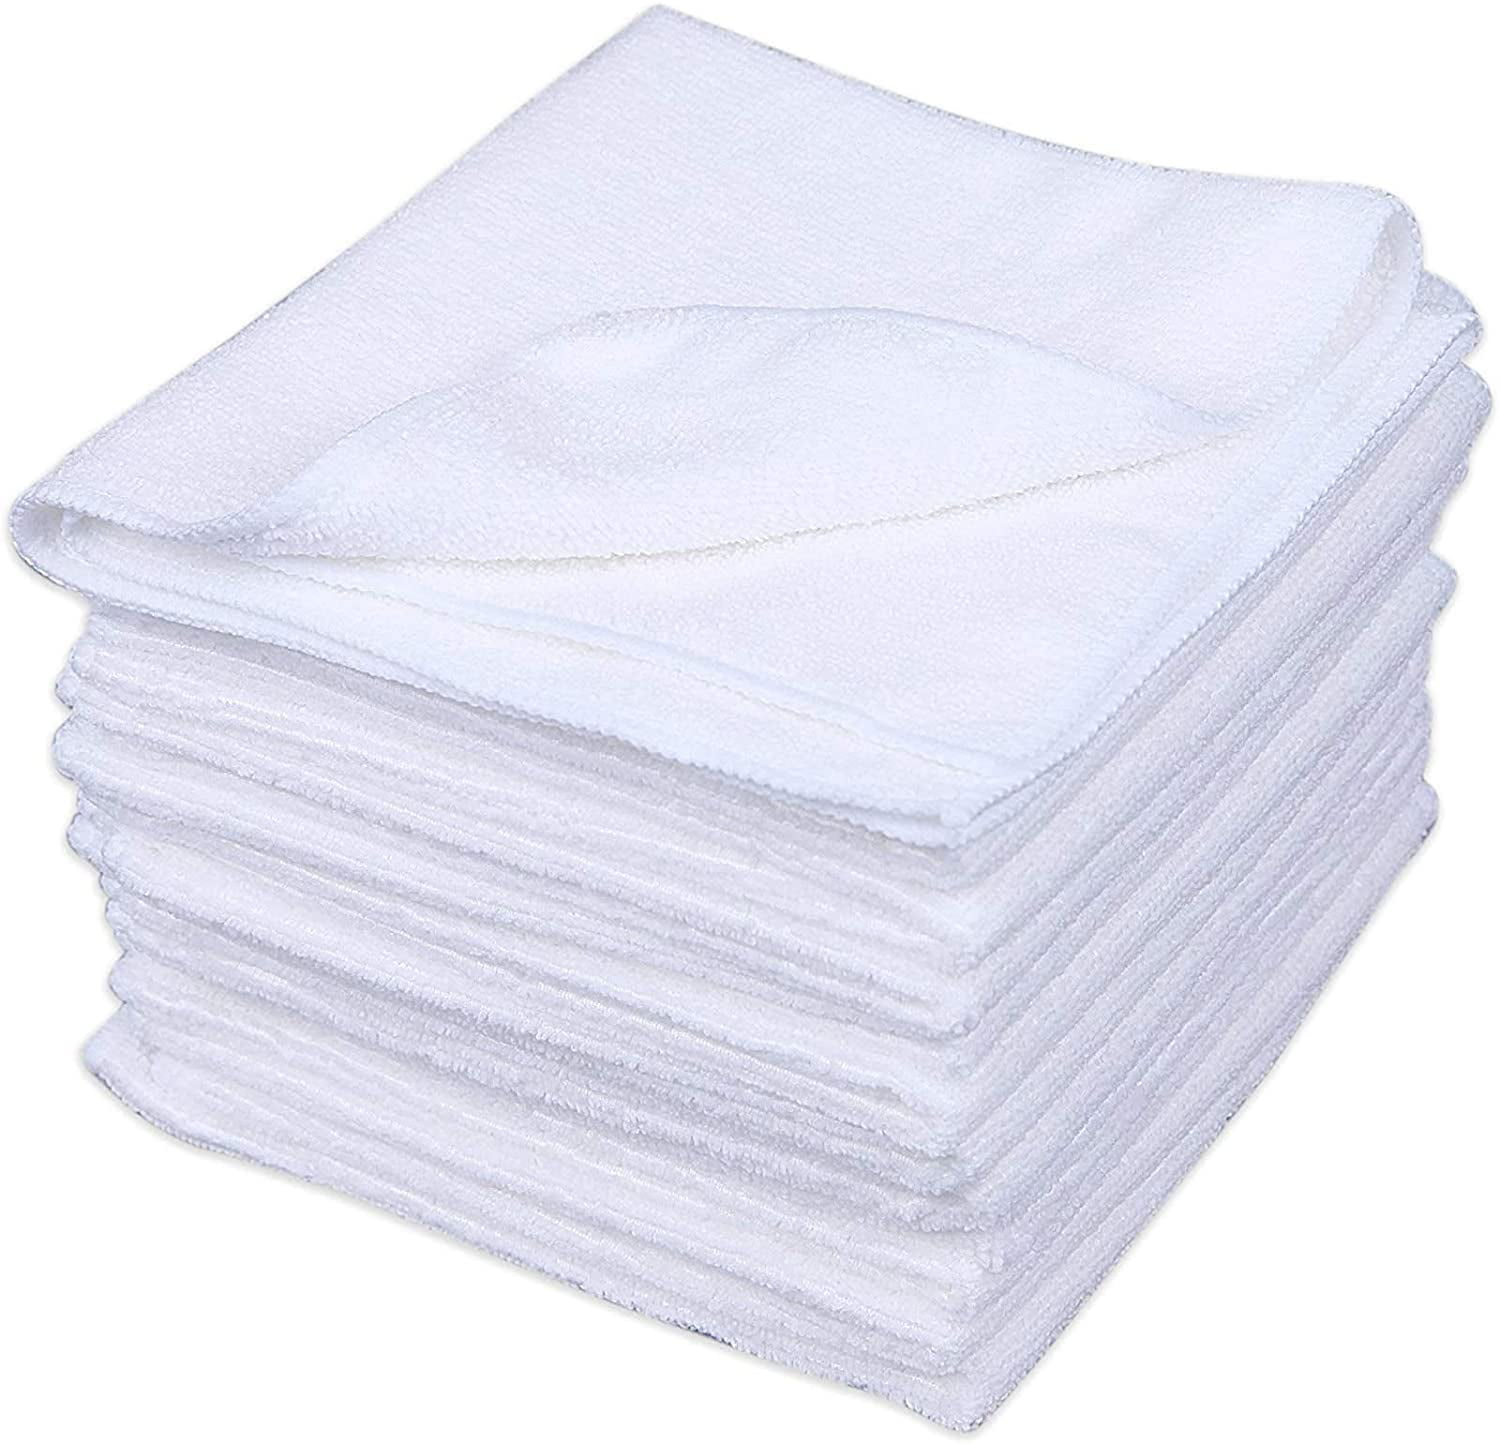 12pcs 14"x14" 300GSM High Quality Microfiber Cleaning Cloths Towels 